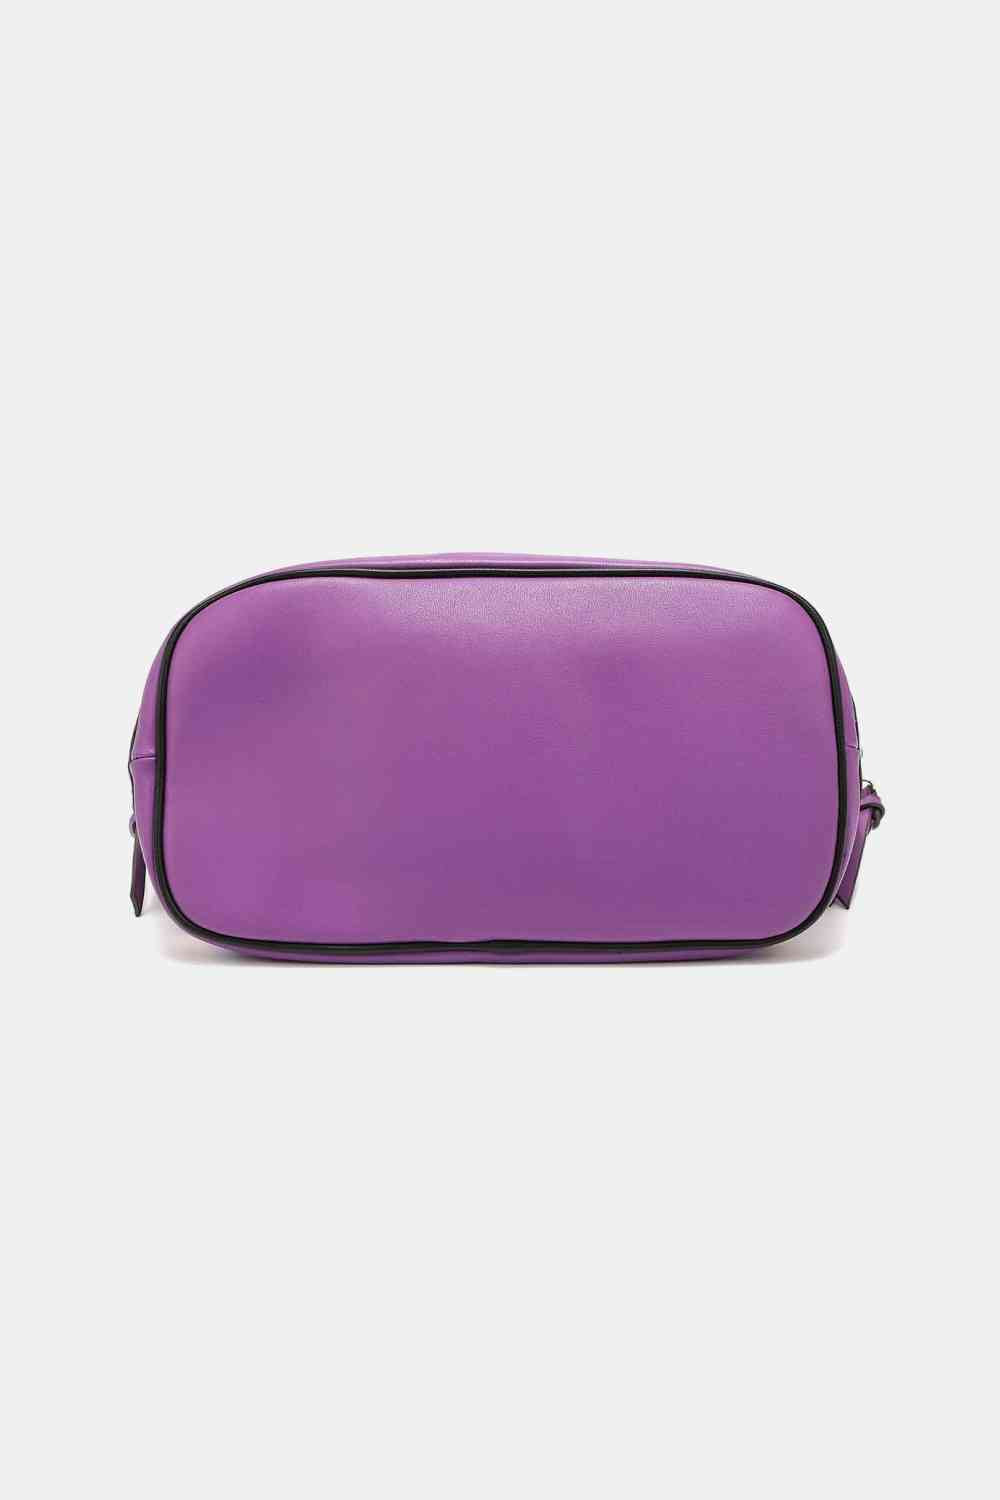 Nicole Lee USA Quihn 3-Piece Handbag Set Purpure No 5